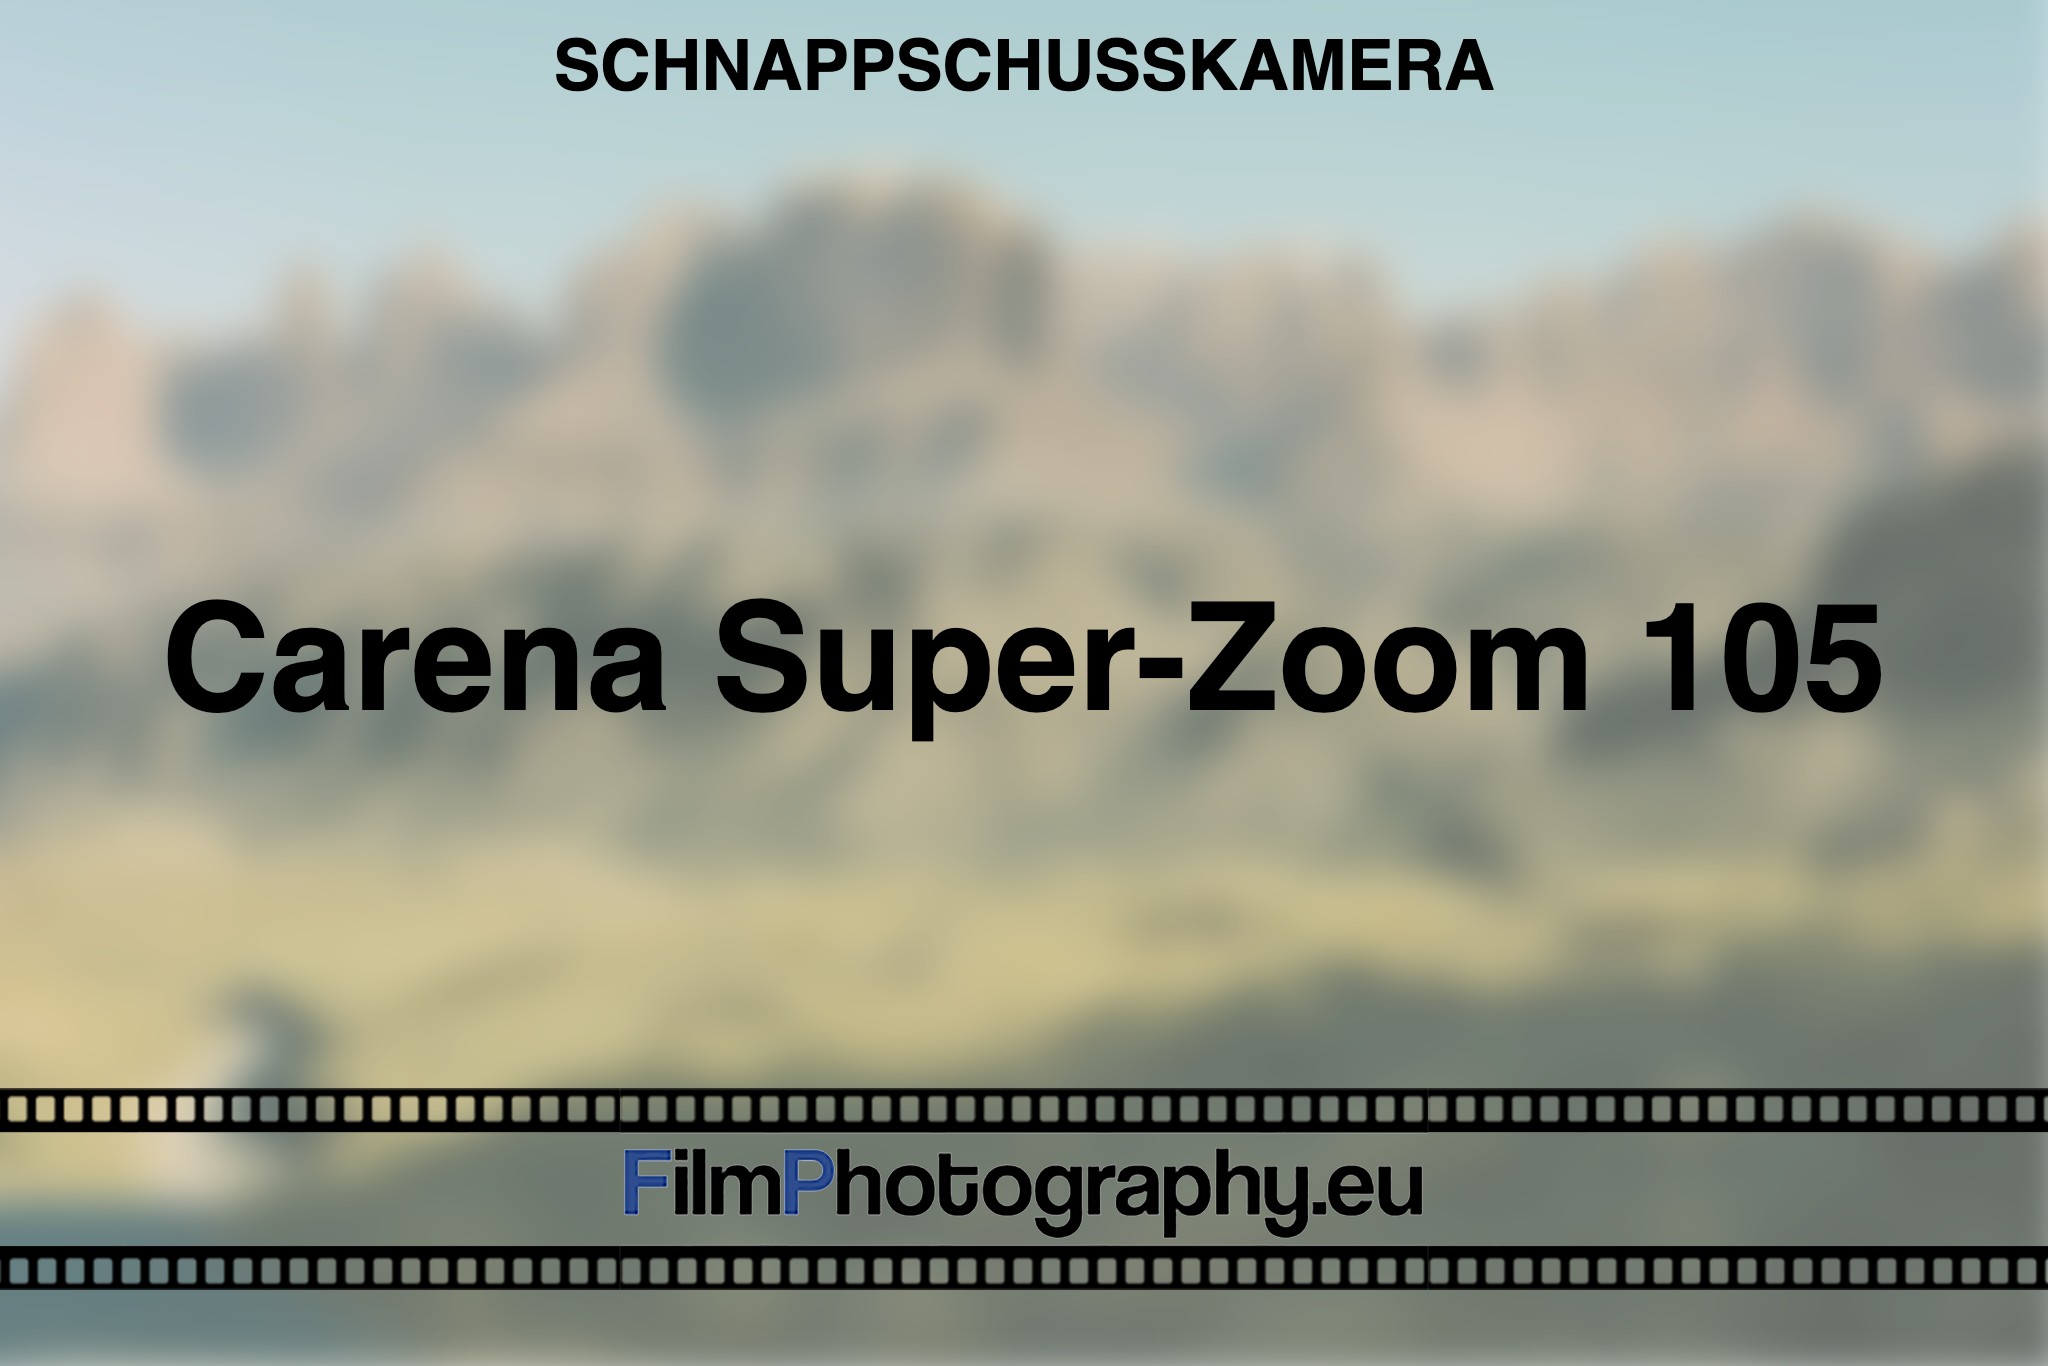 carena-super-zoom-105-schnappschusskamera-bnv